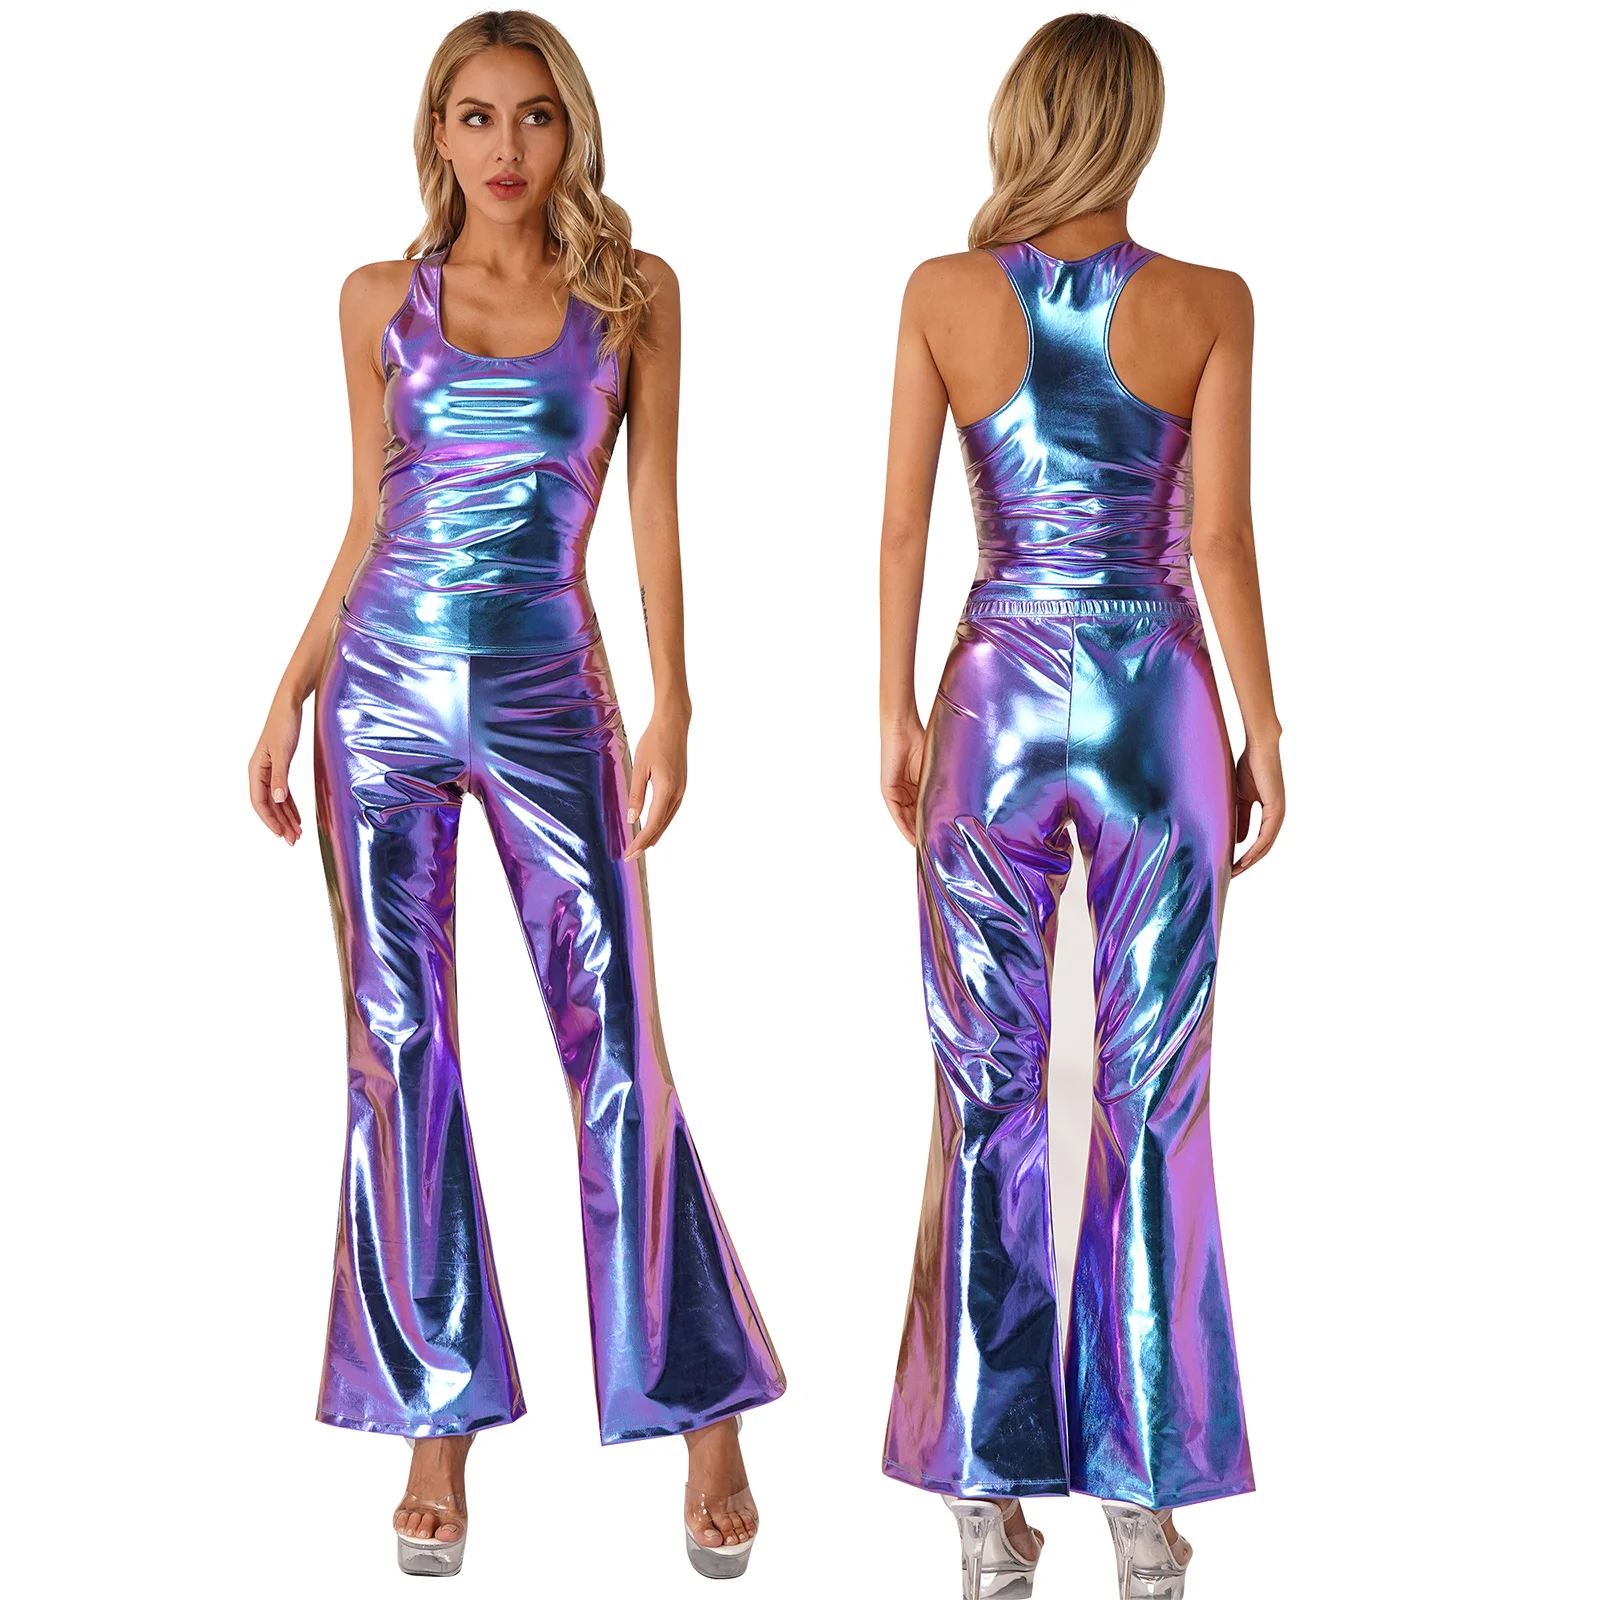 

Womens Metallic Shiny Clubwear Deep U-neckline Sleeveless Racer Back Tank Top+Flare Pants Party Rave Disco Jazz Dance Costumes